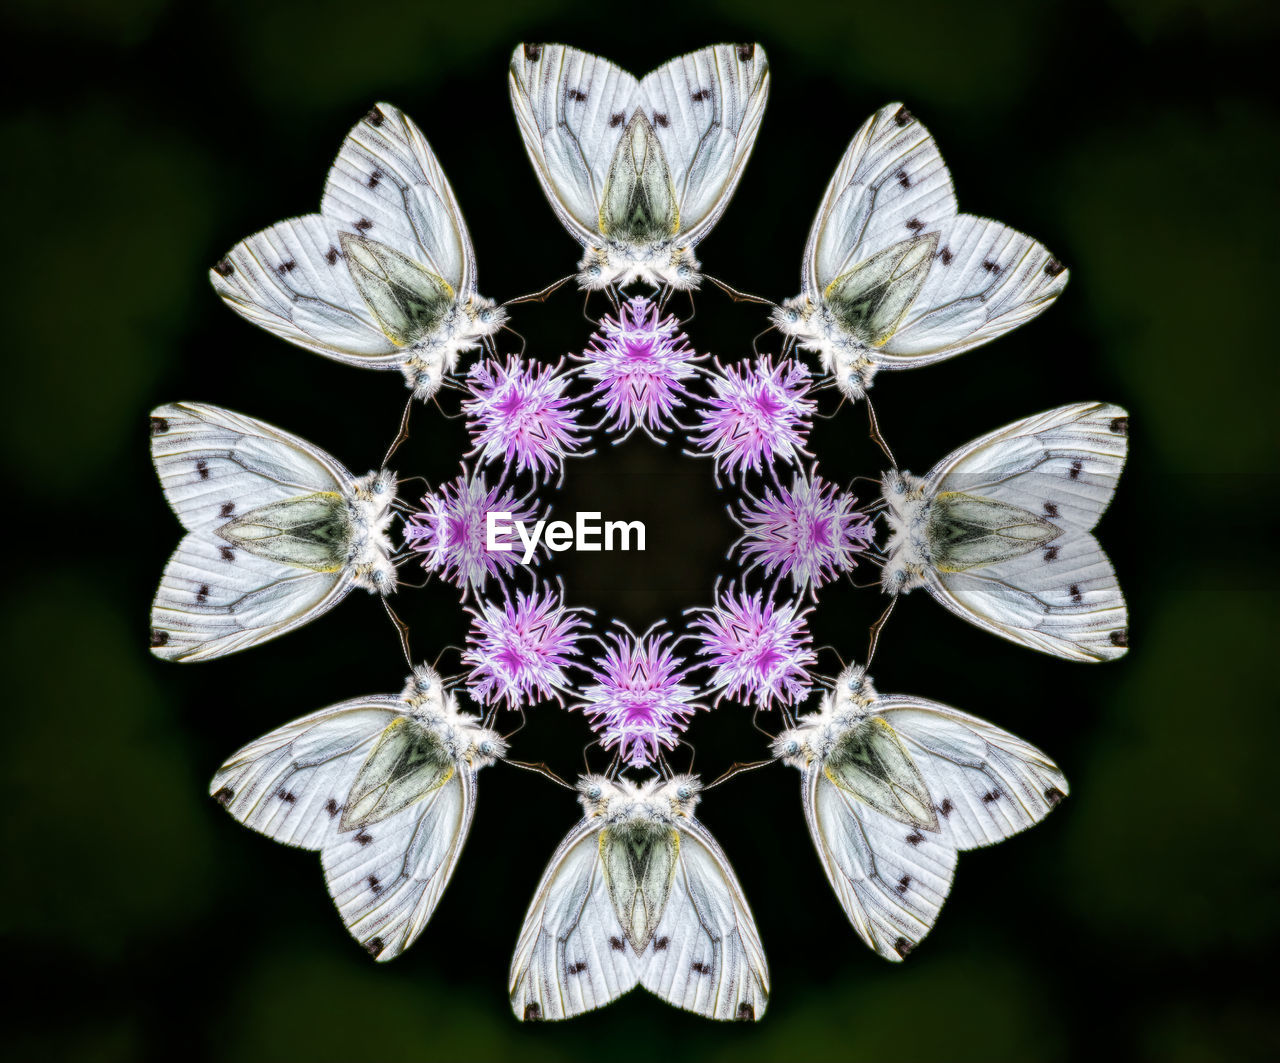 Kaleidoscope image of butterfly 